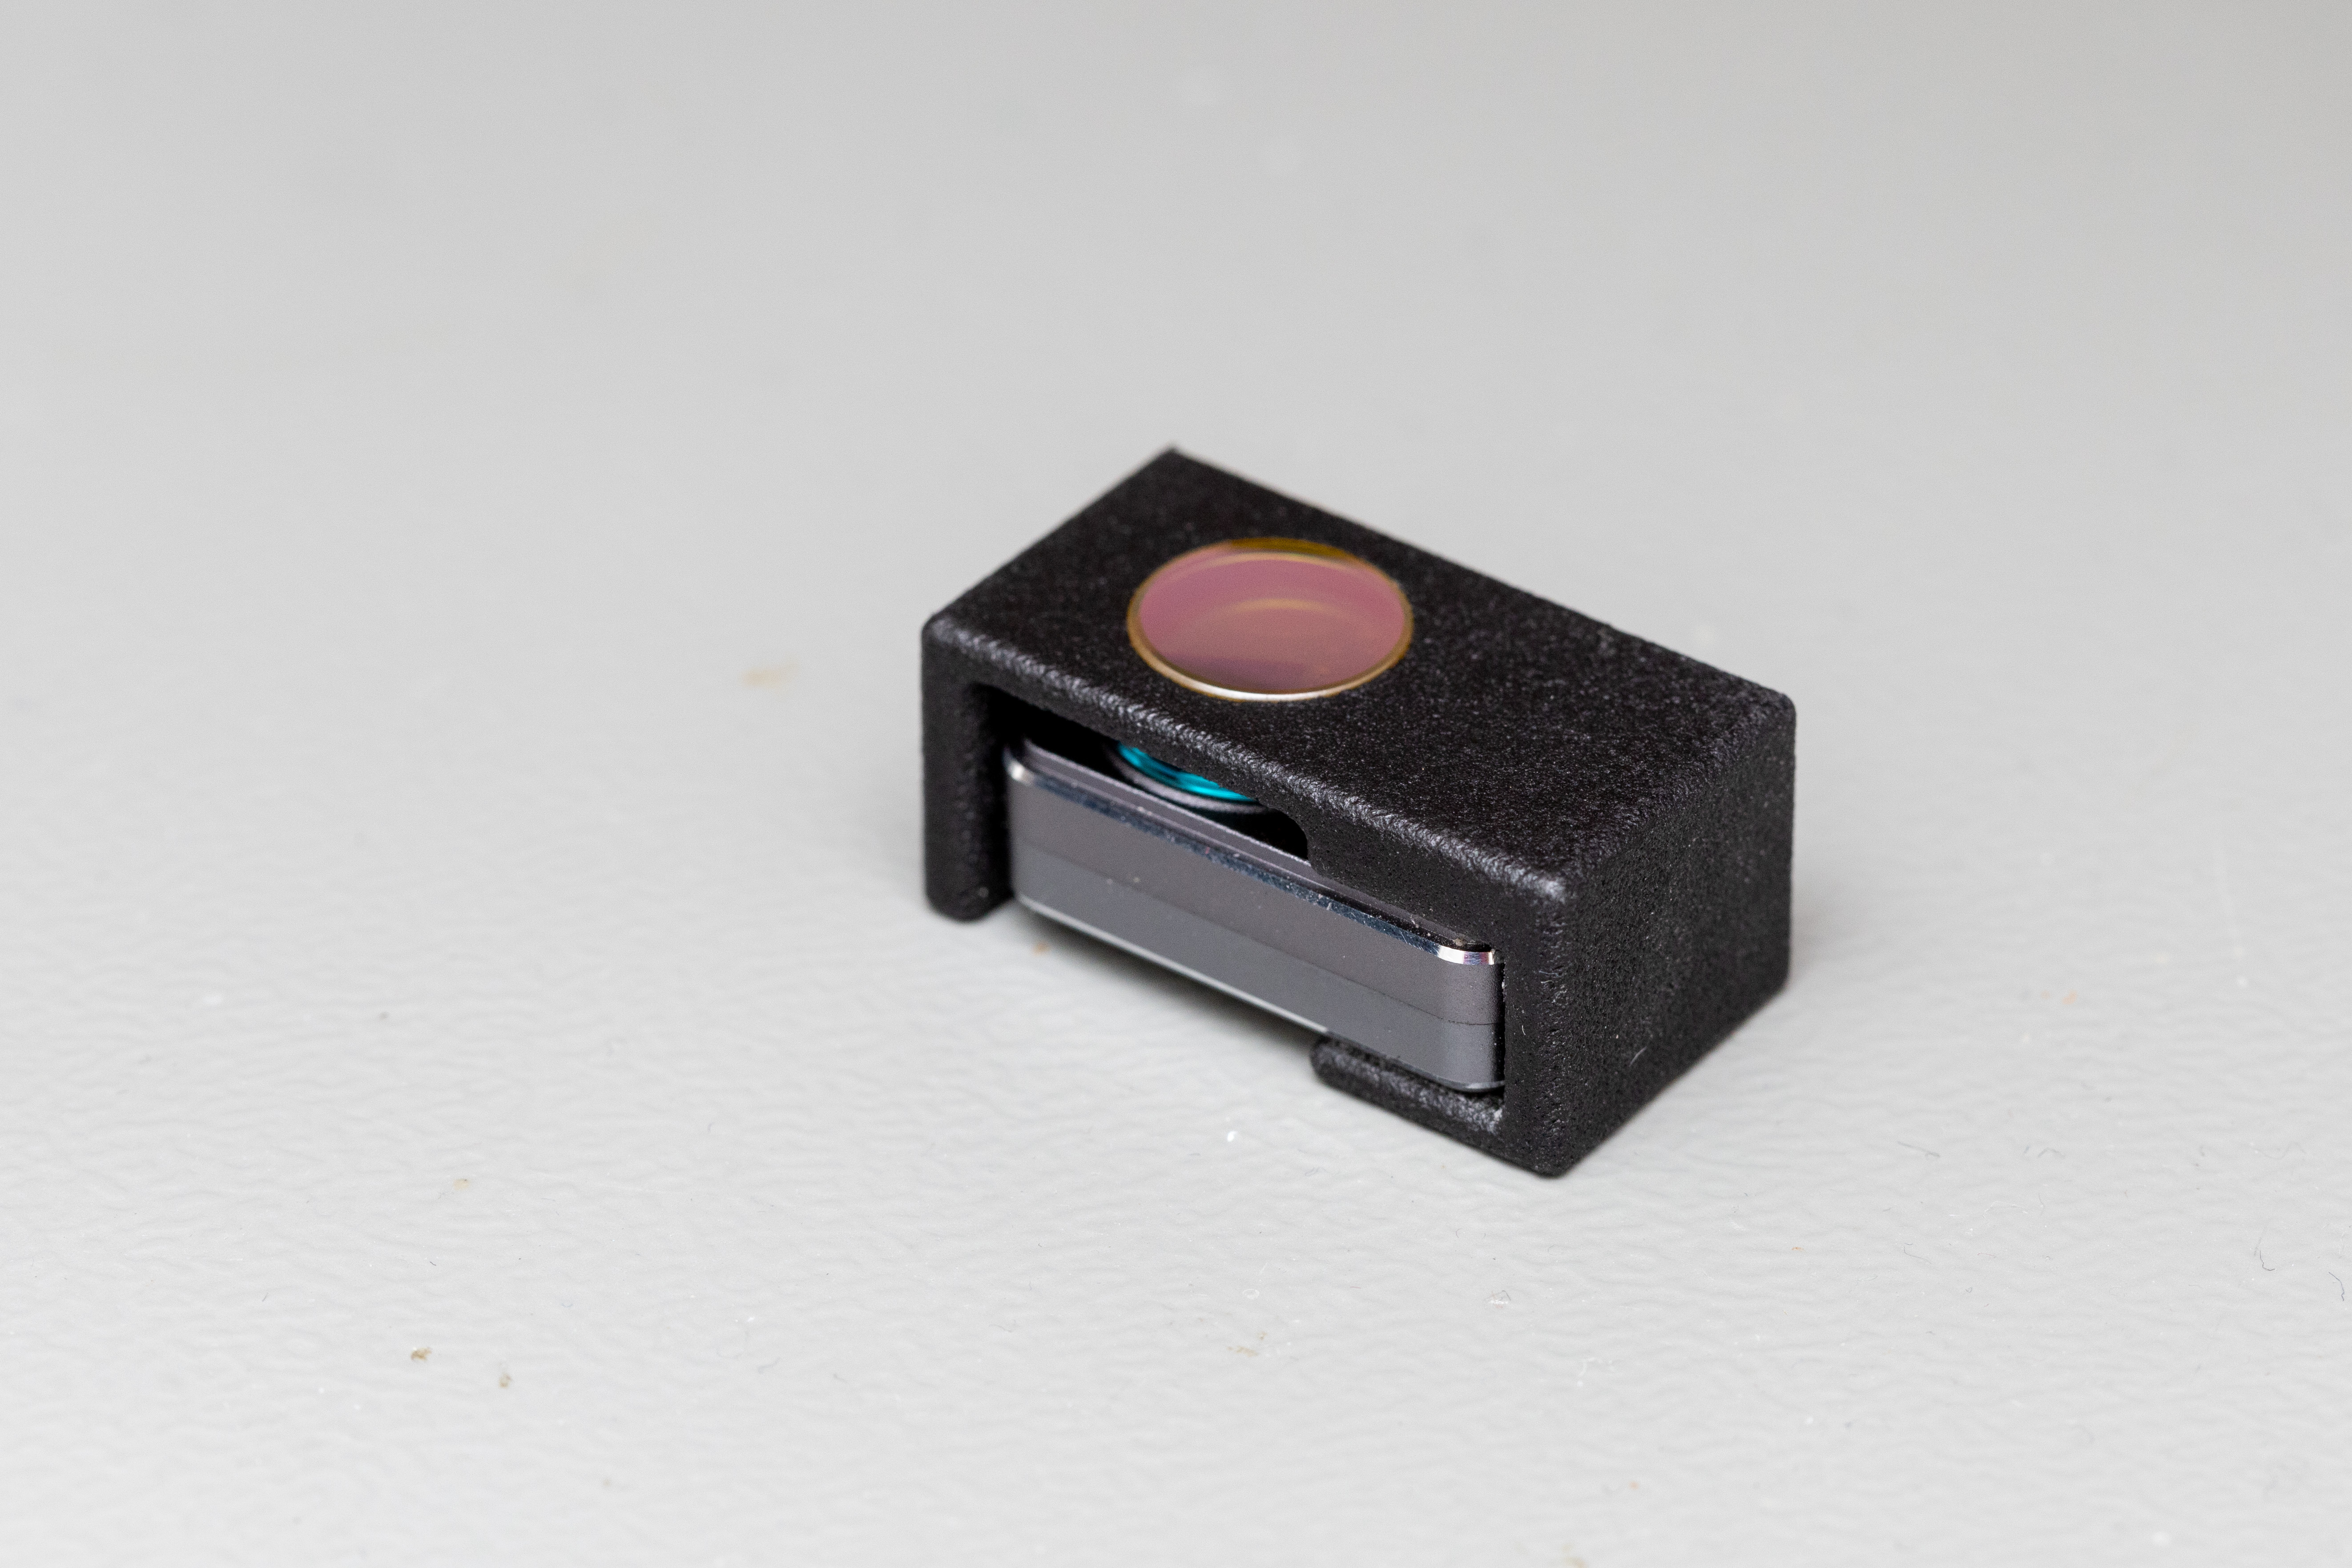 Infisense/Infiray P2 thermal camera macro lens holder